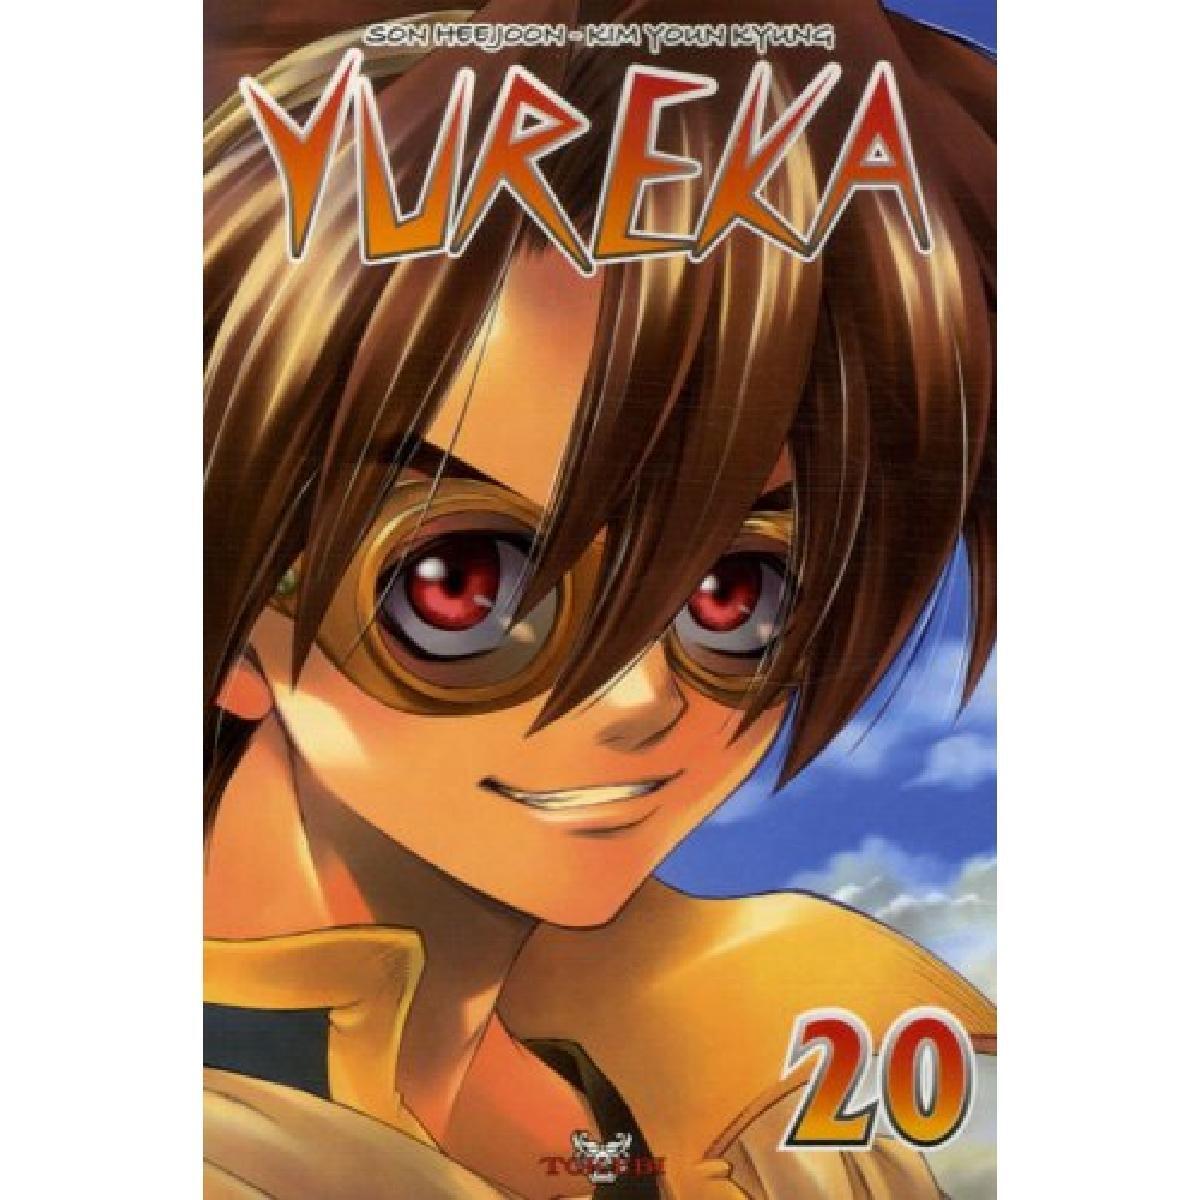 Manga Yureka Tome 20 - Editions Tokebi